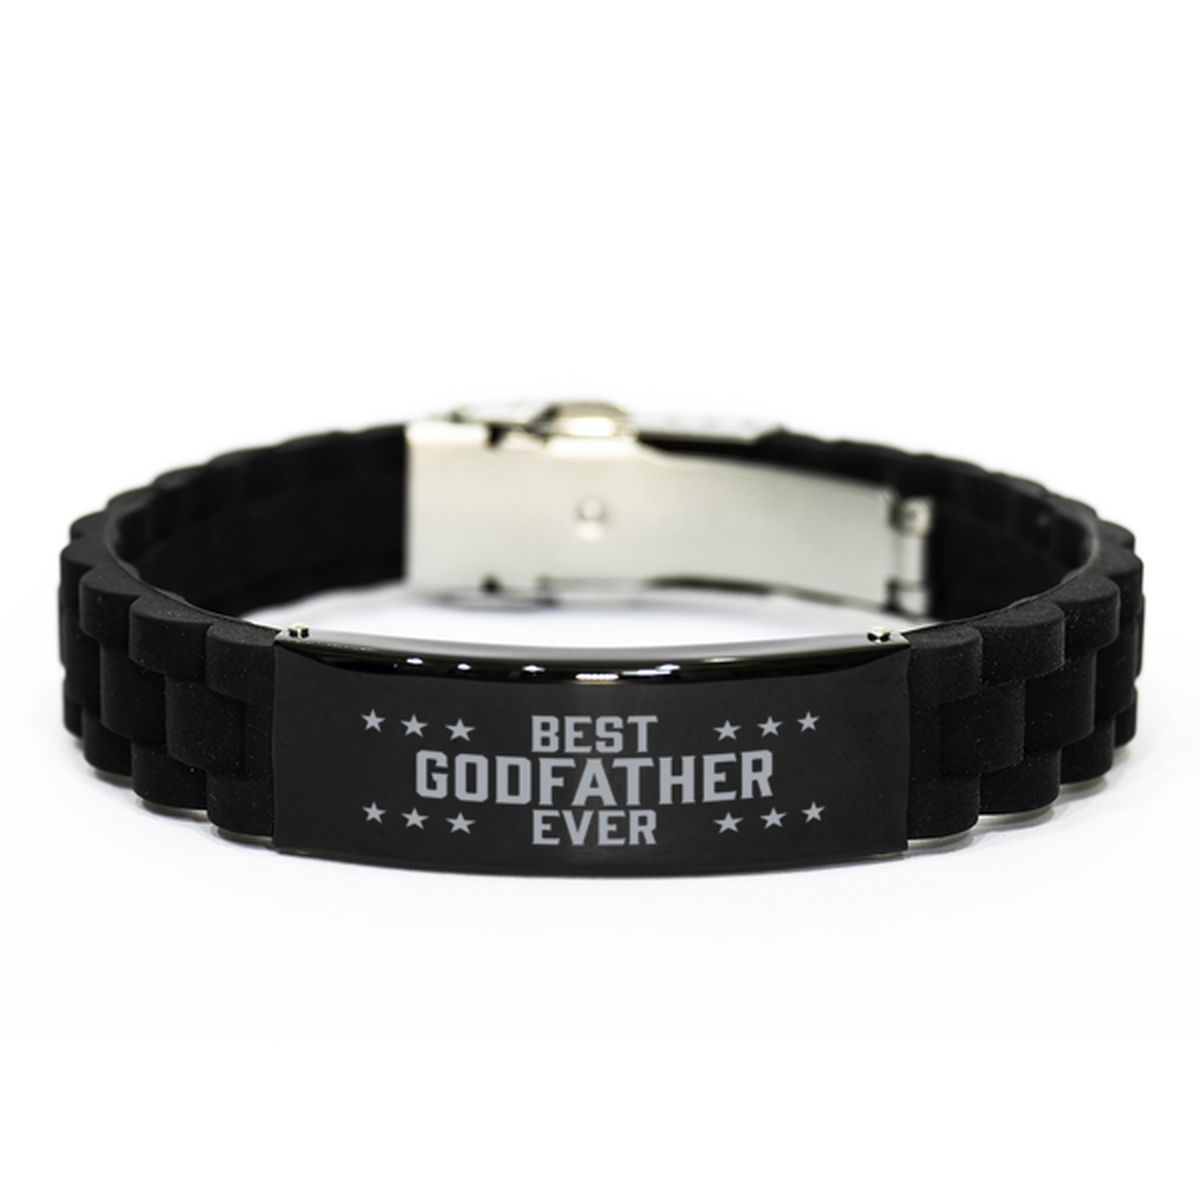 Best Godfather Ever Godfather Gifts, Funny Black Engraved Bracelet For Godfather, Family Gifts For Men